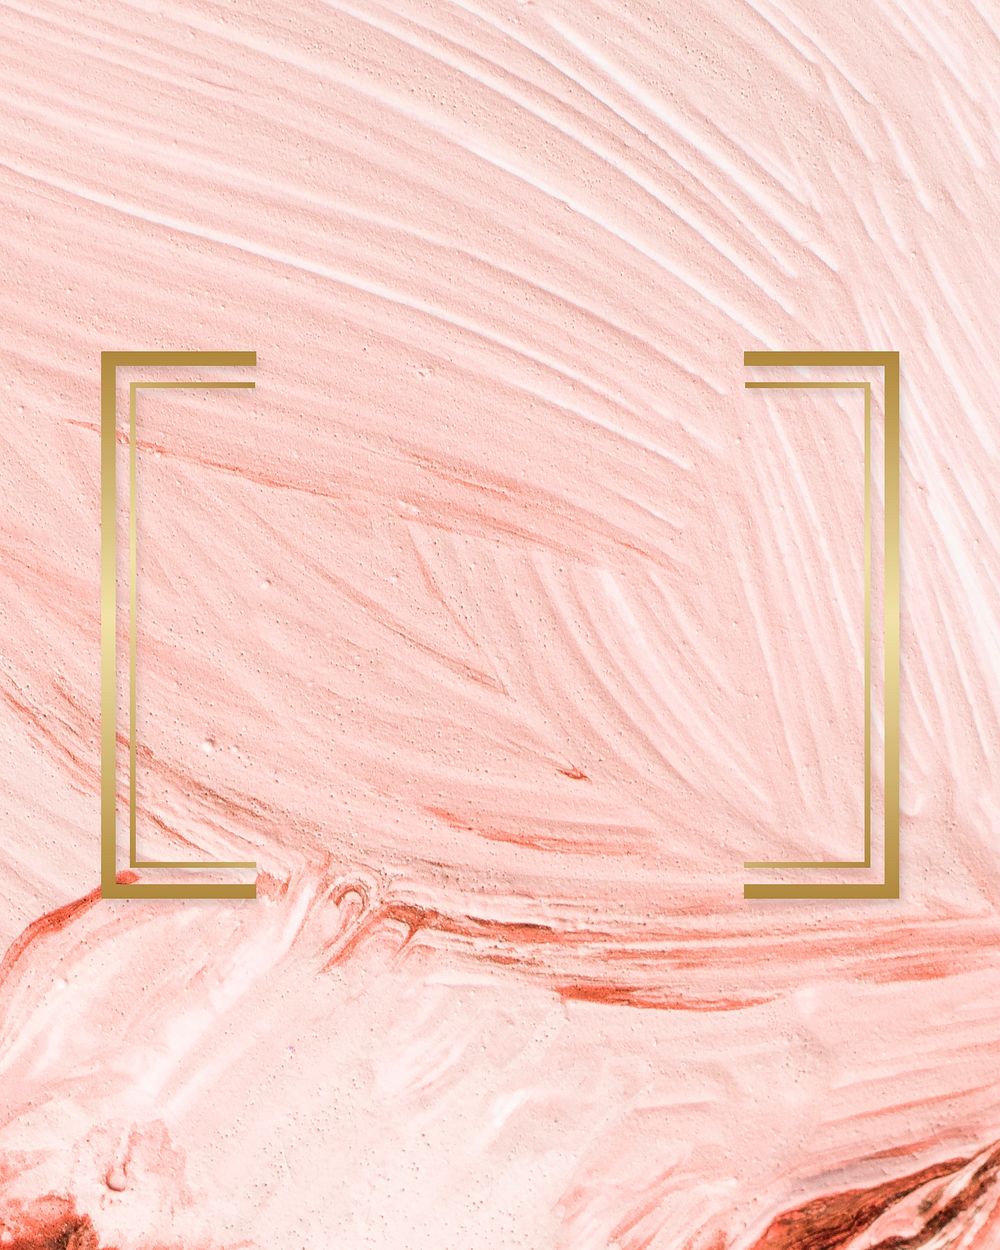 Gold square frame on a pastel pink paintbrush stroke patterned background